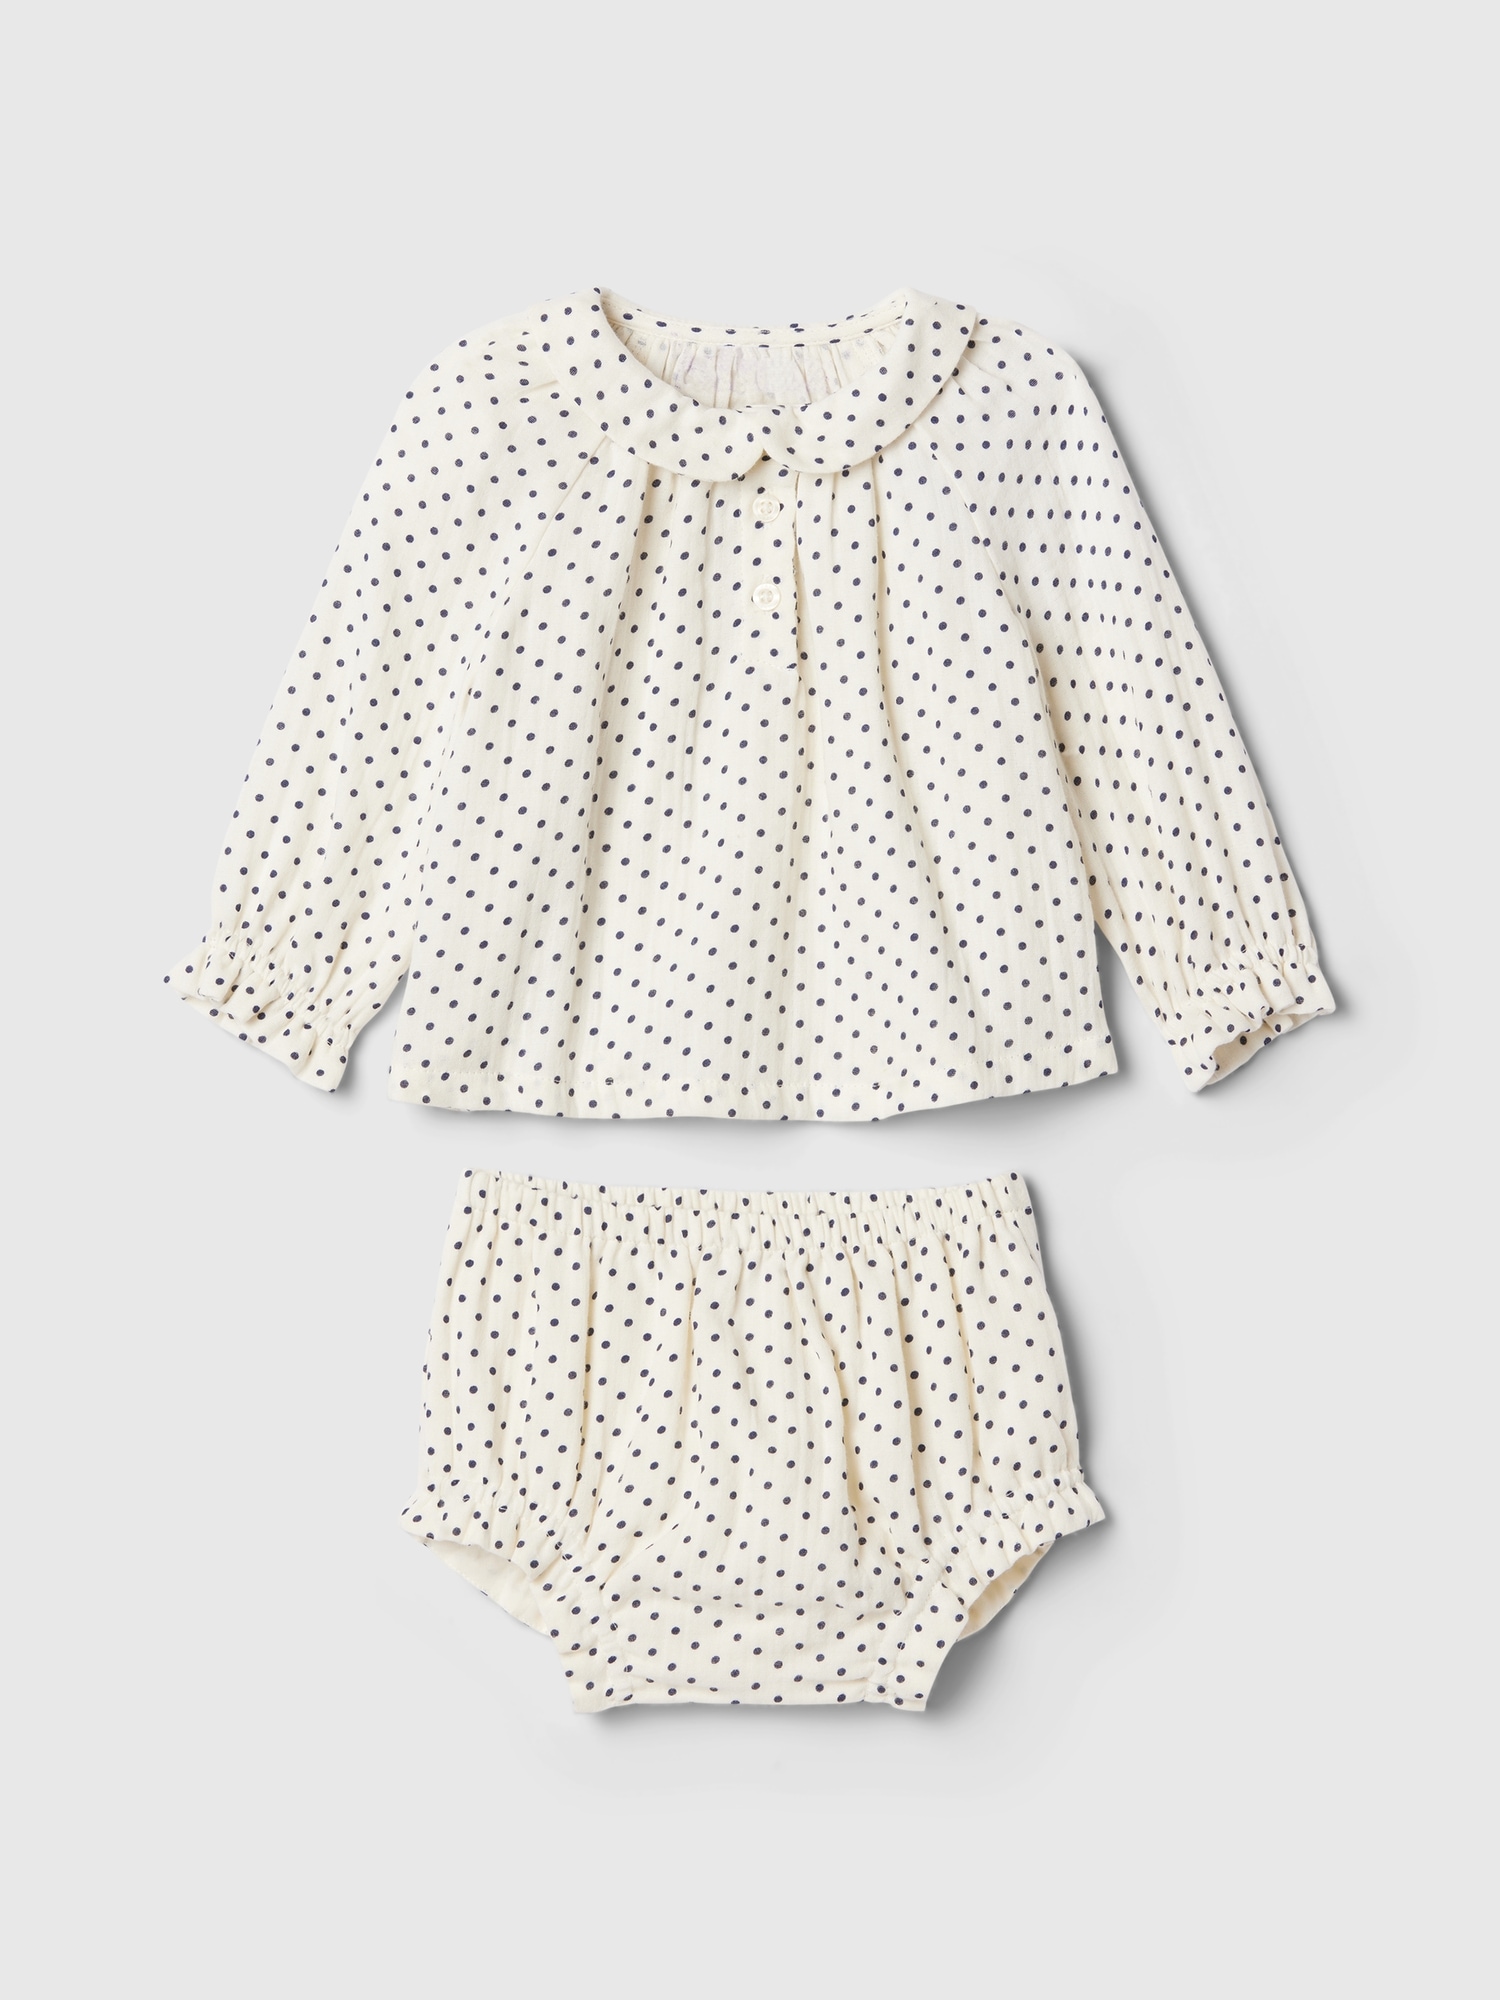 Baby Polka Dot Outfit Set